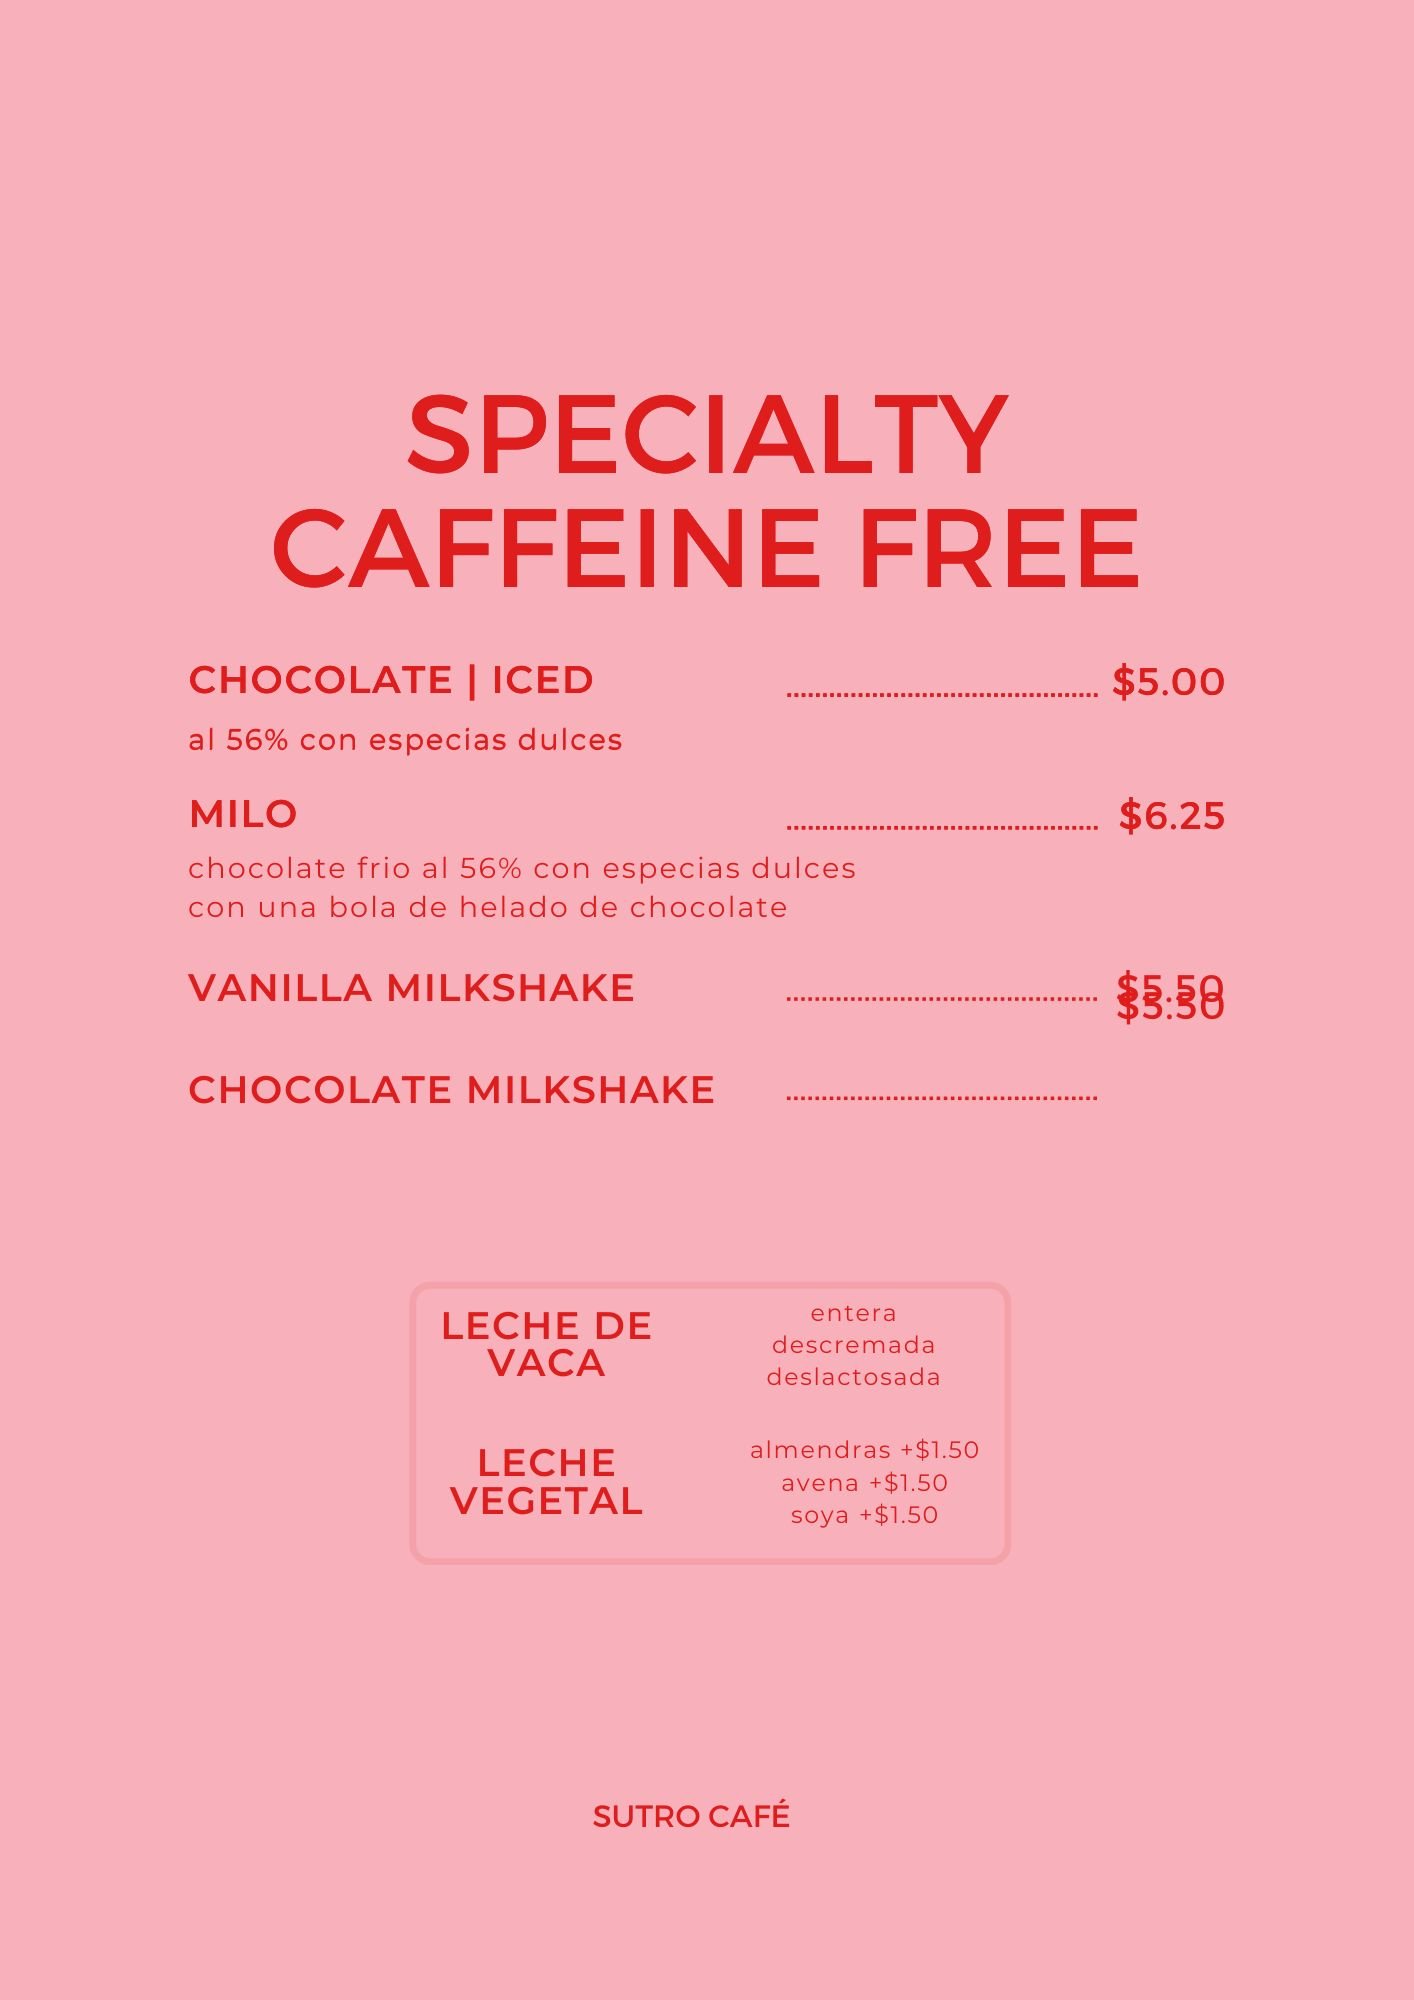 caffeine free.jpg